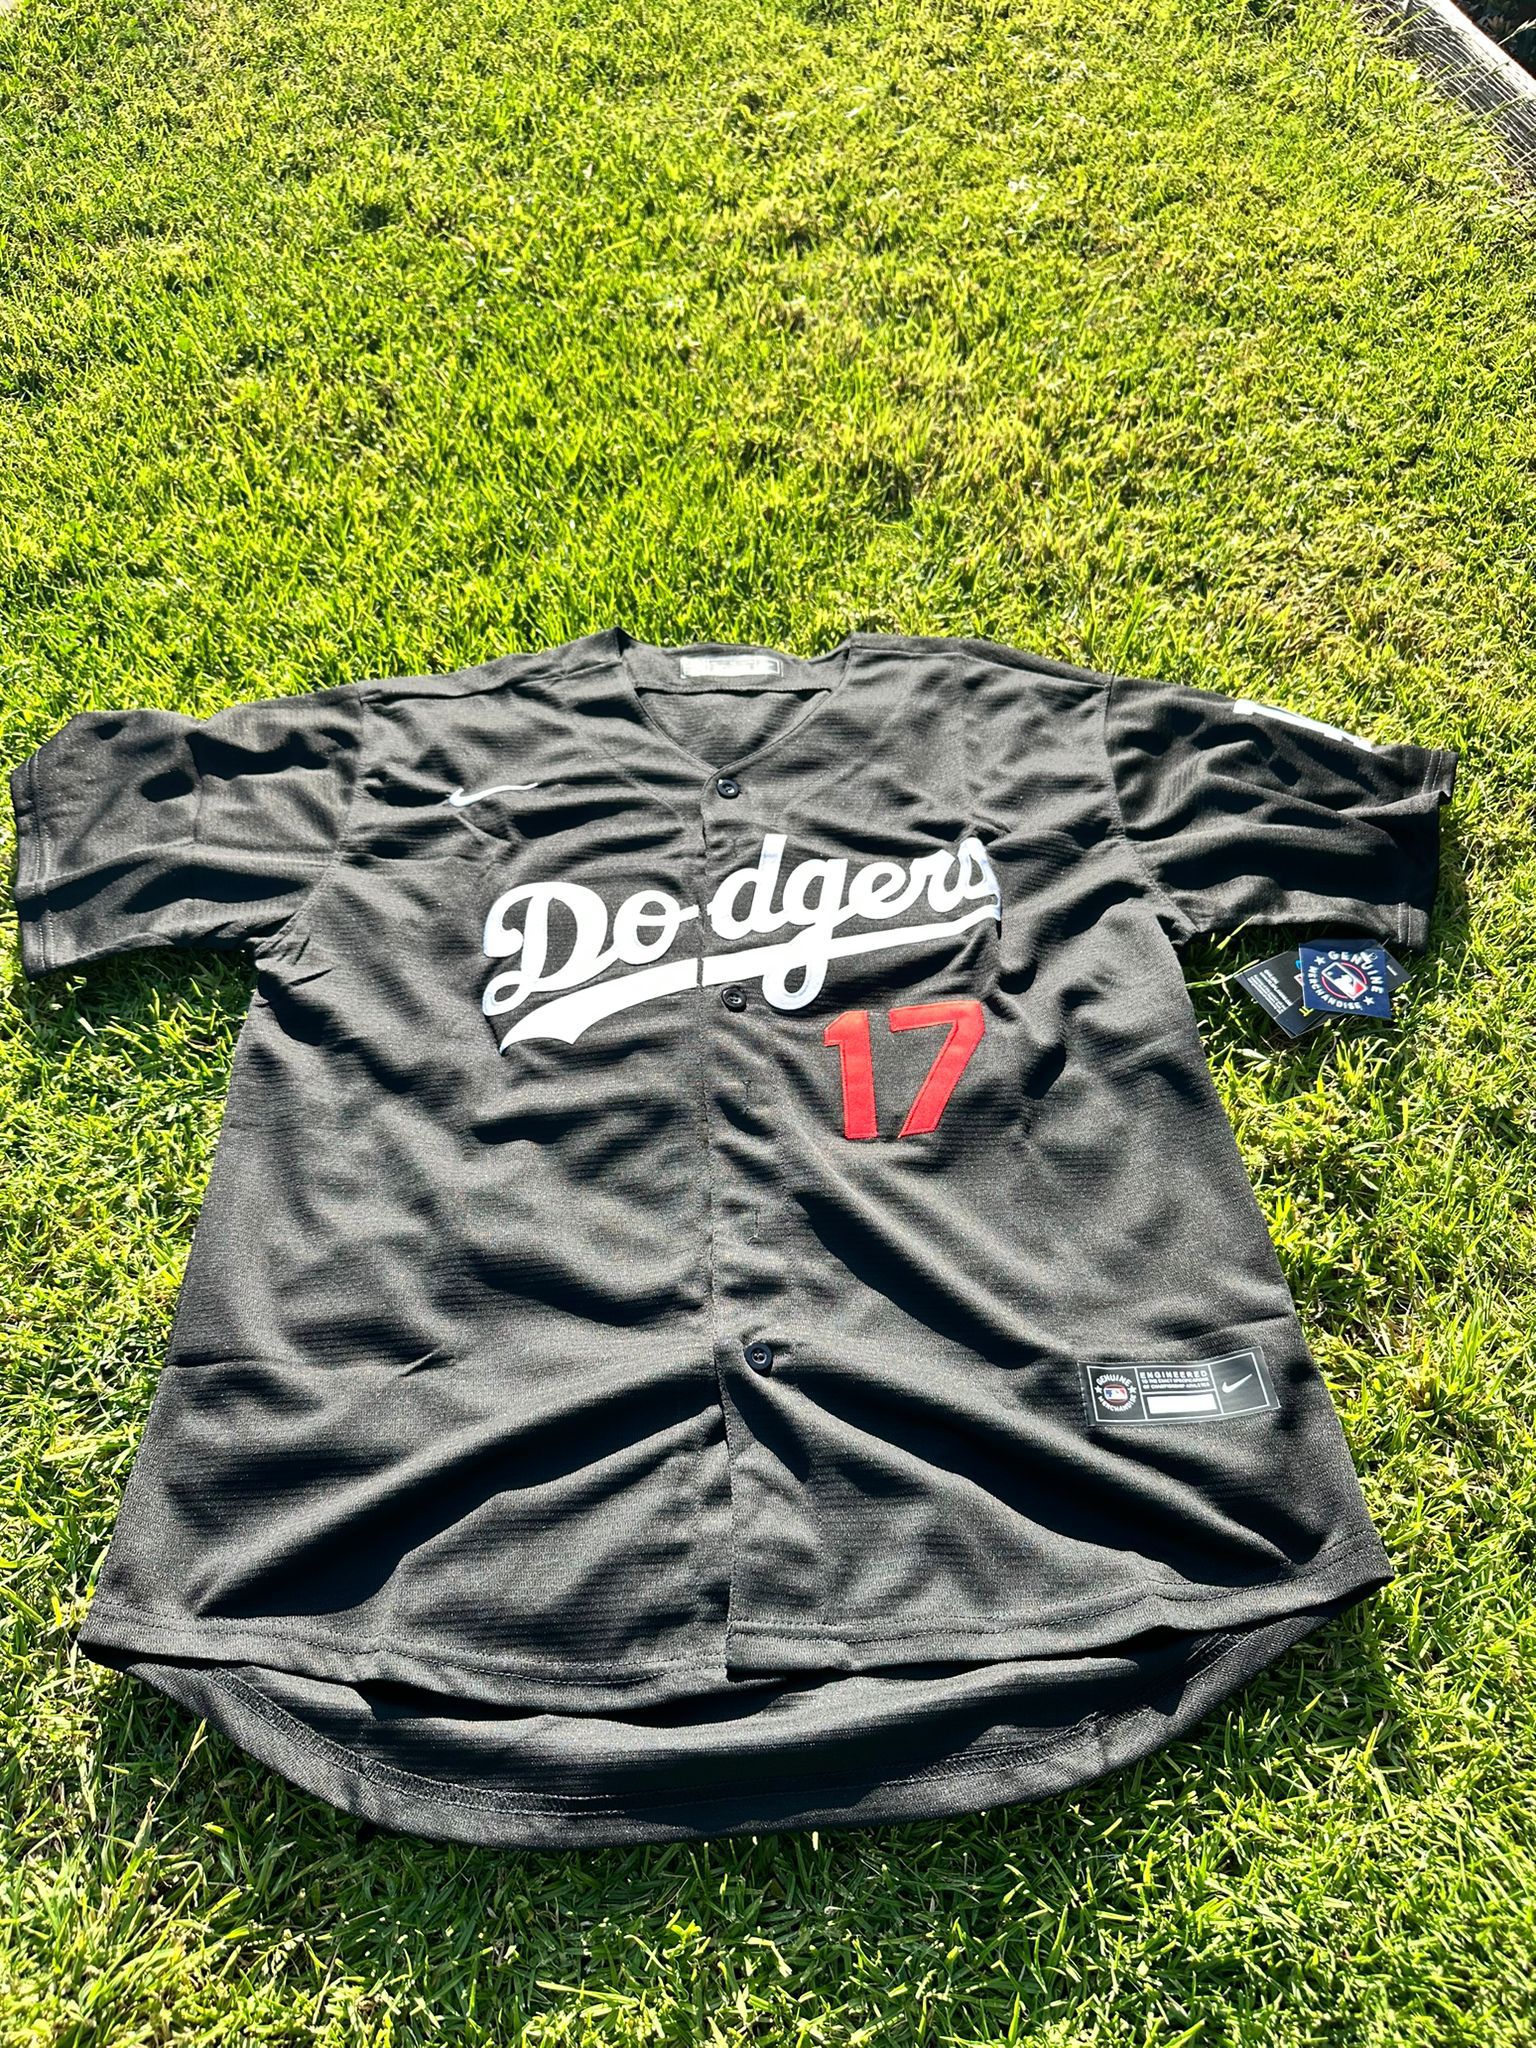 Dodgers Otani 17 black jersey size XL